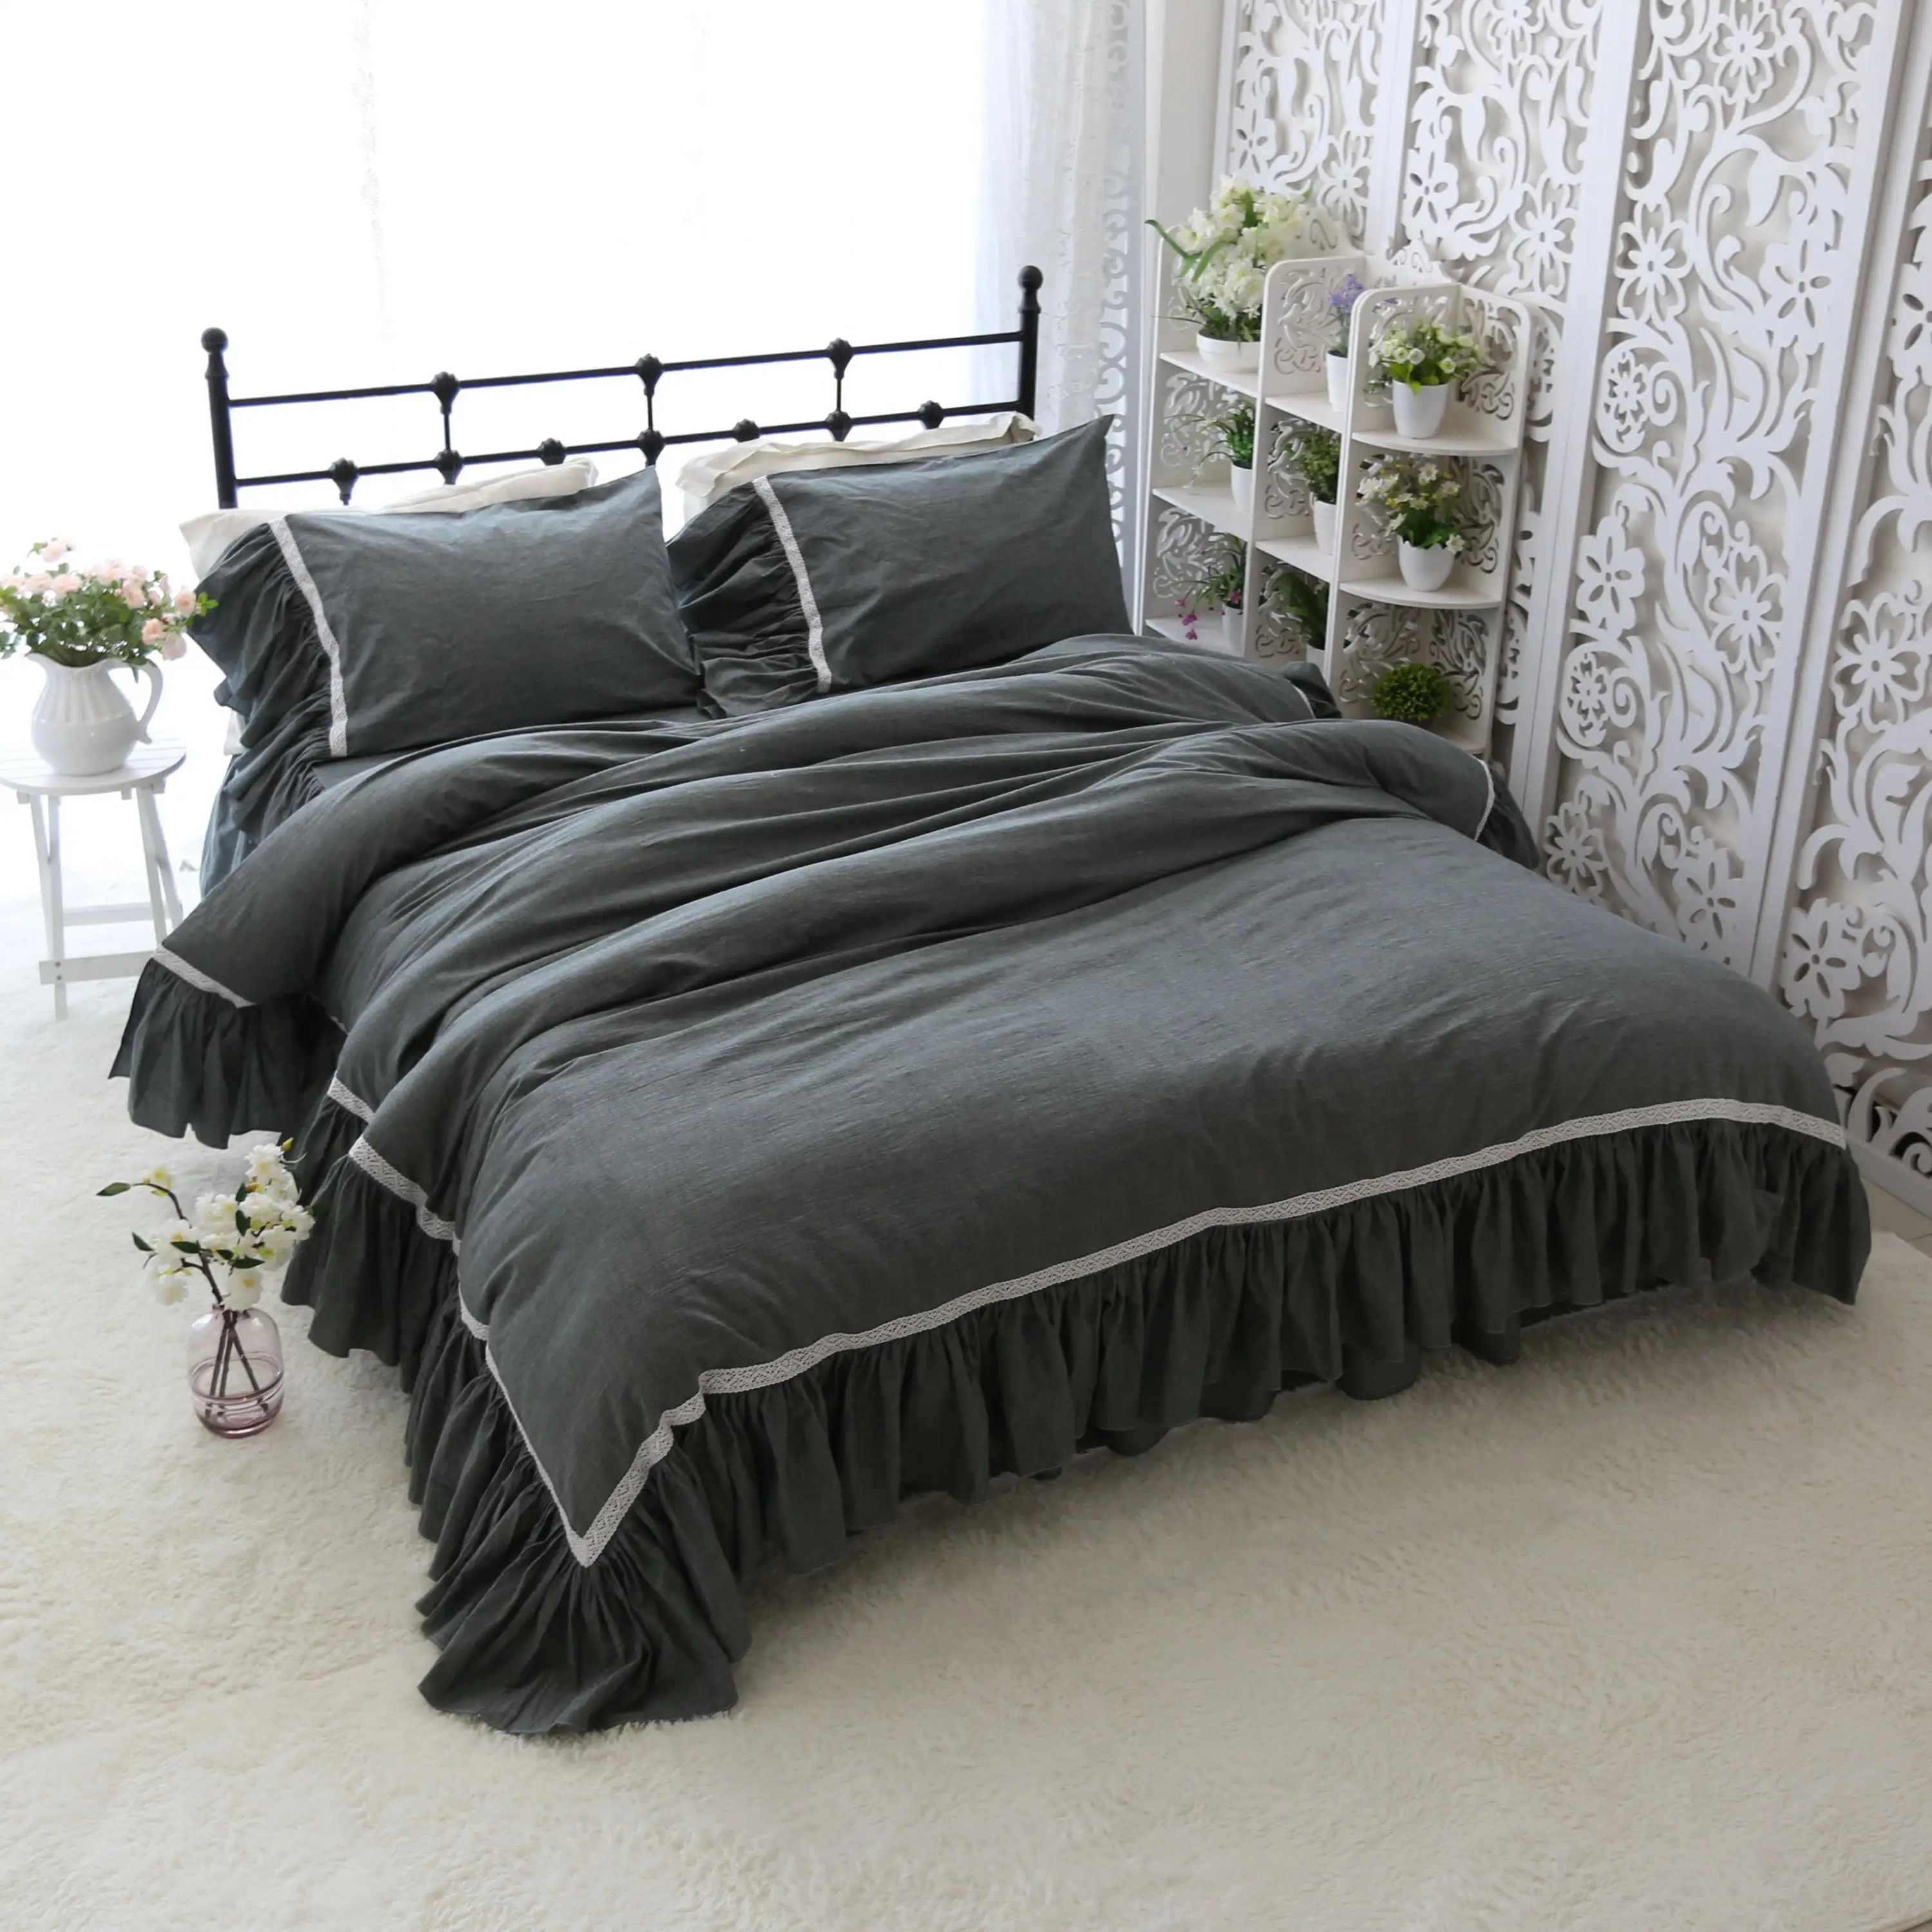 

Deep Grey Wide Ruffles Duvet Cover 100%Washed Cotton Shabby Soft Bedding Sets Bedskirt Pillowshams Queen King Twin size 4Pcs